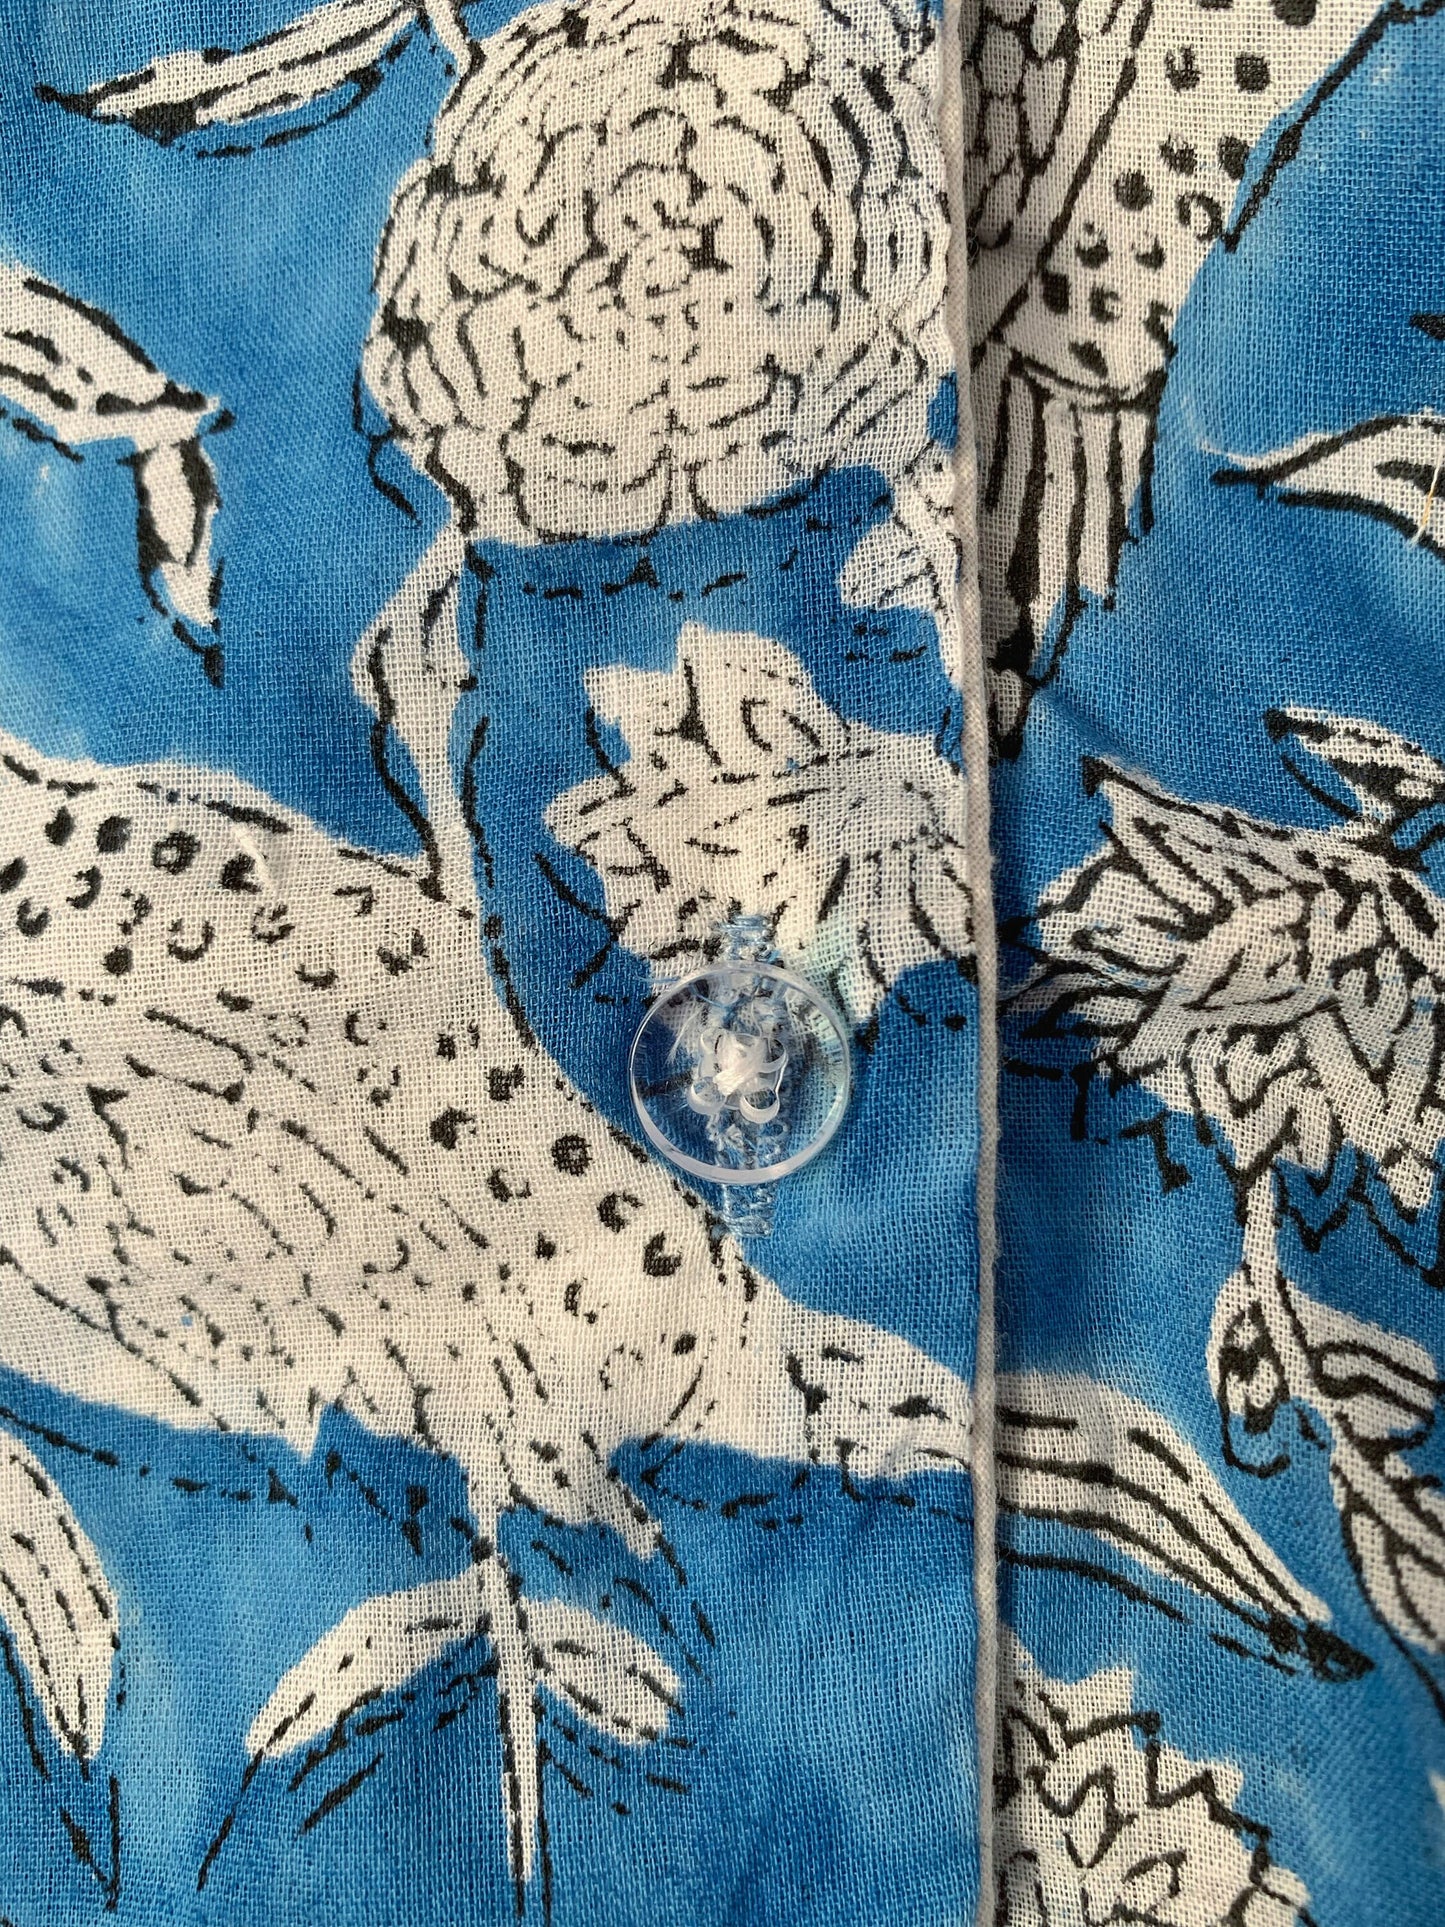 Gift SET Pajamas with sleeves/shorts &amp; matching kimono robe Pure cotton block print handmade in India Blue flowers